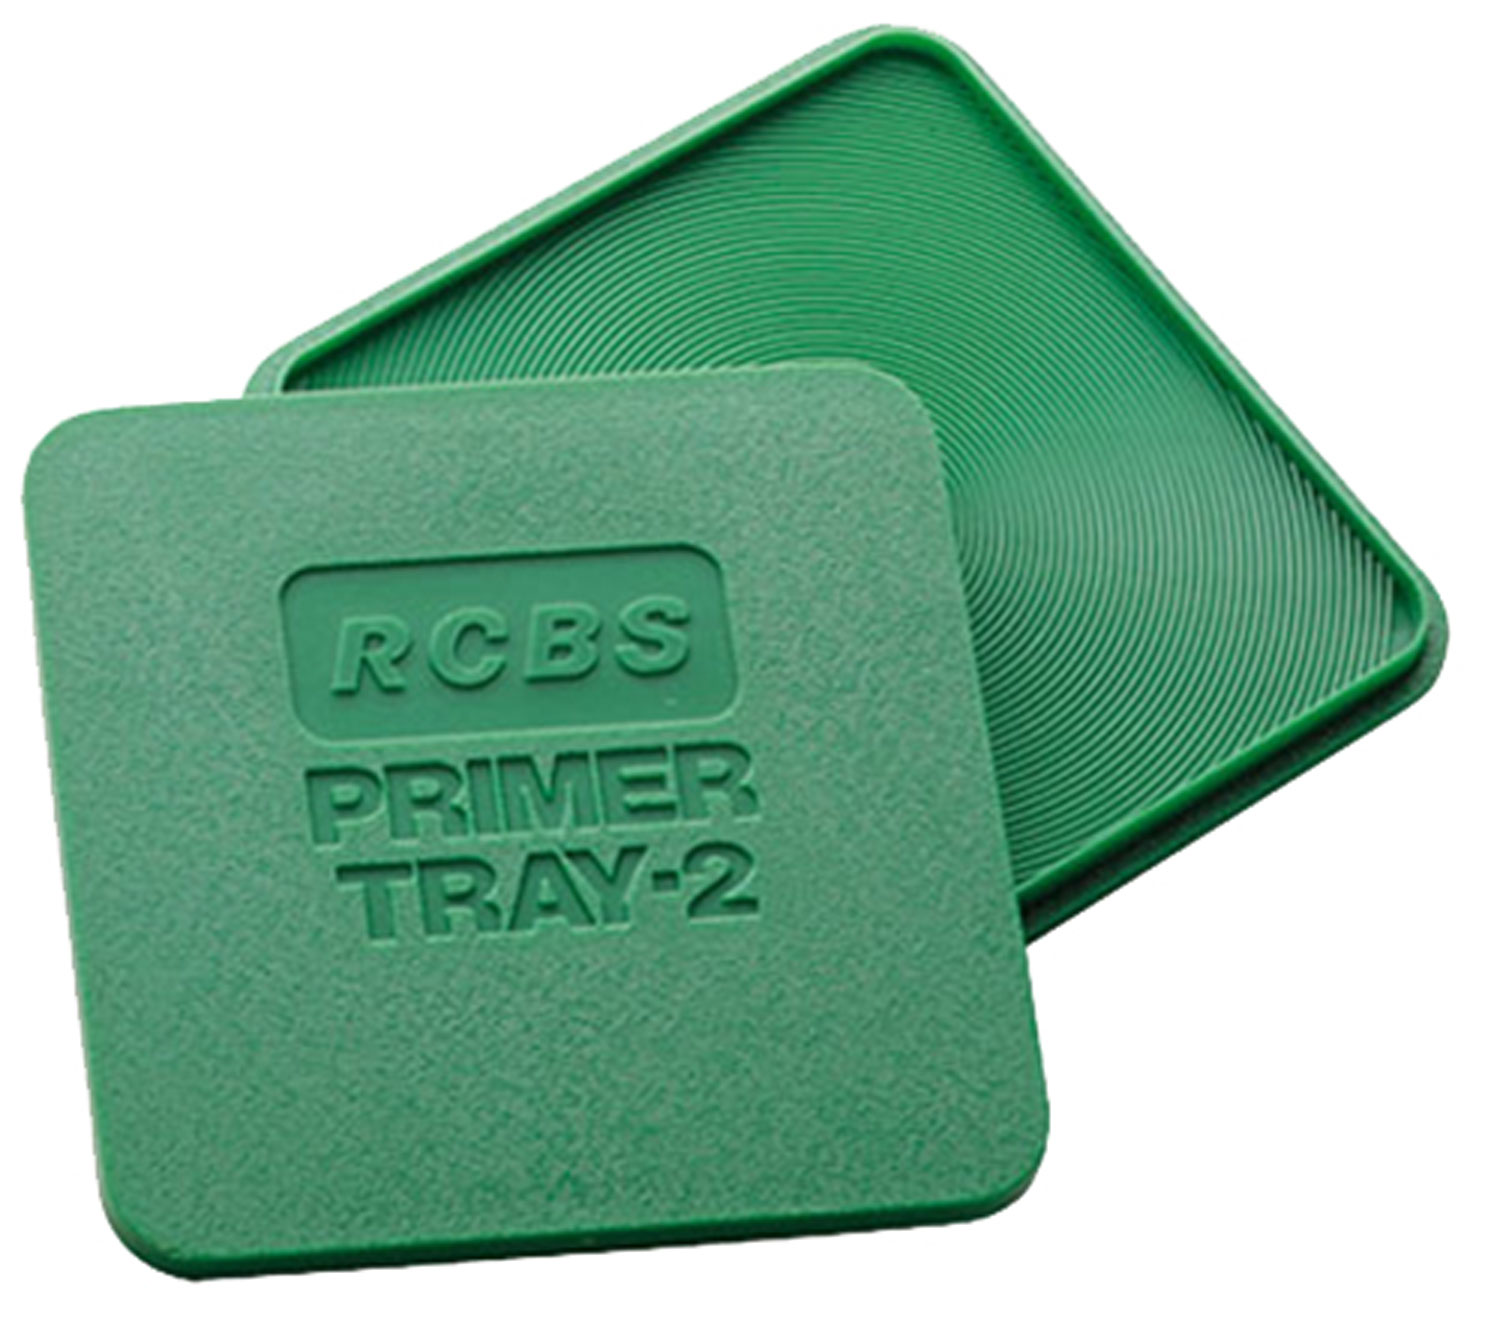 RCBS 9480 Primer Tray-2  Multi-Caliber Polymer